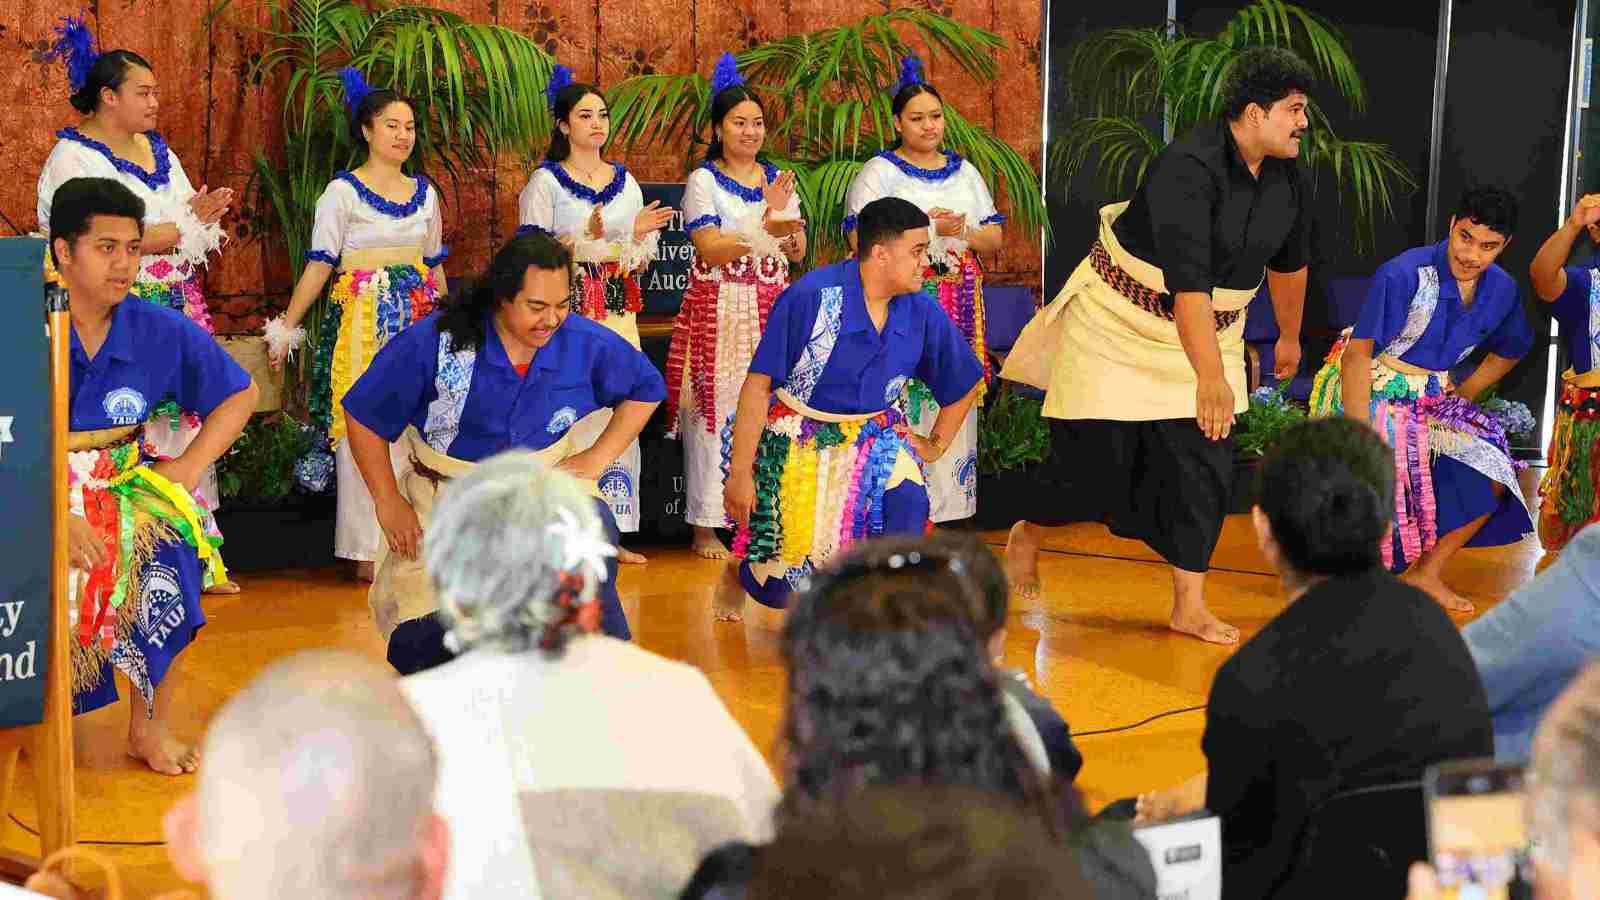 University of Auckland Tongan performance group